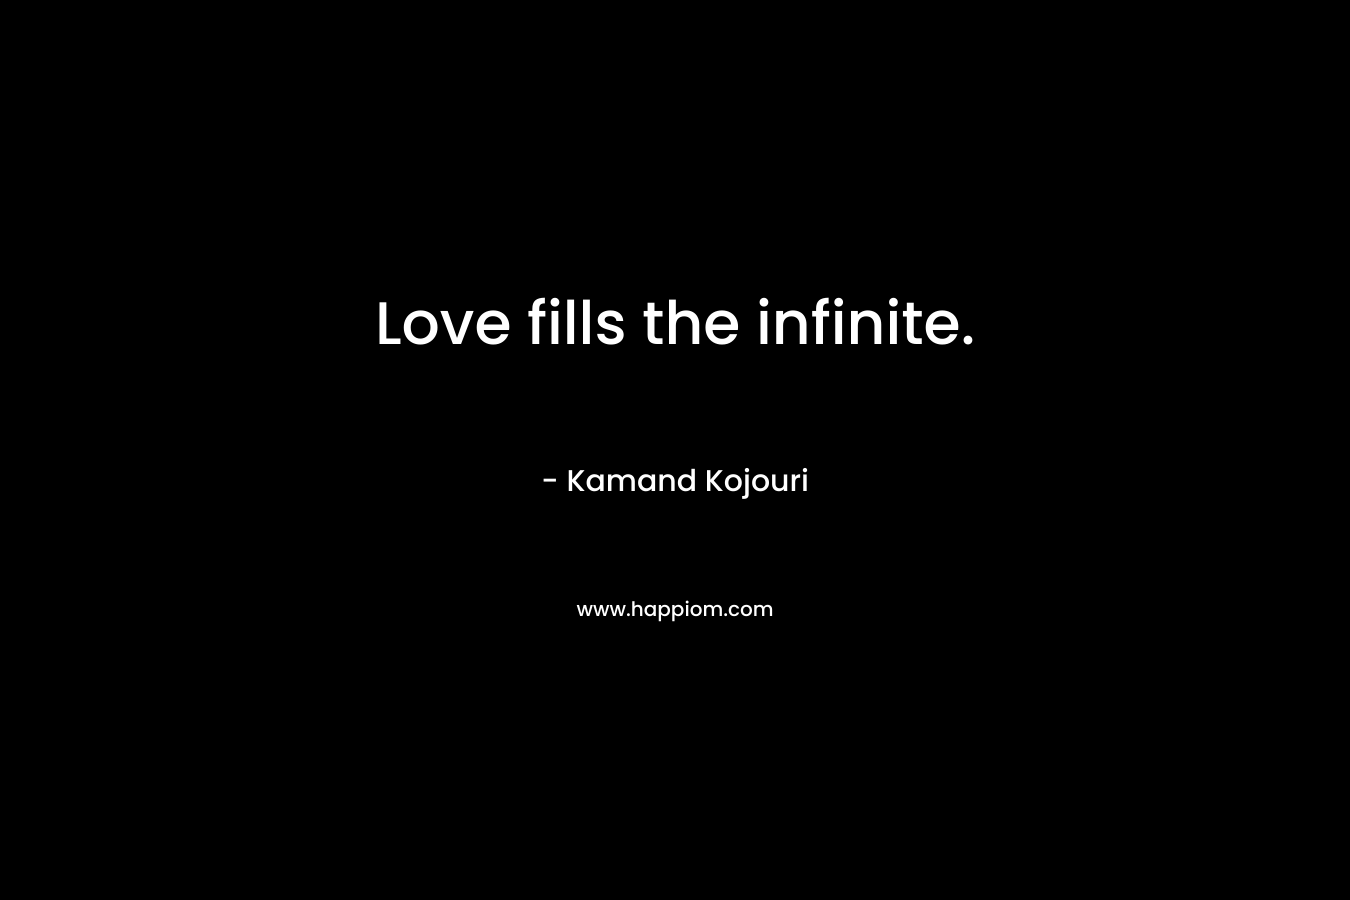 Love fills the infinite.